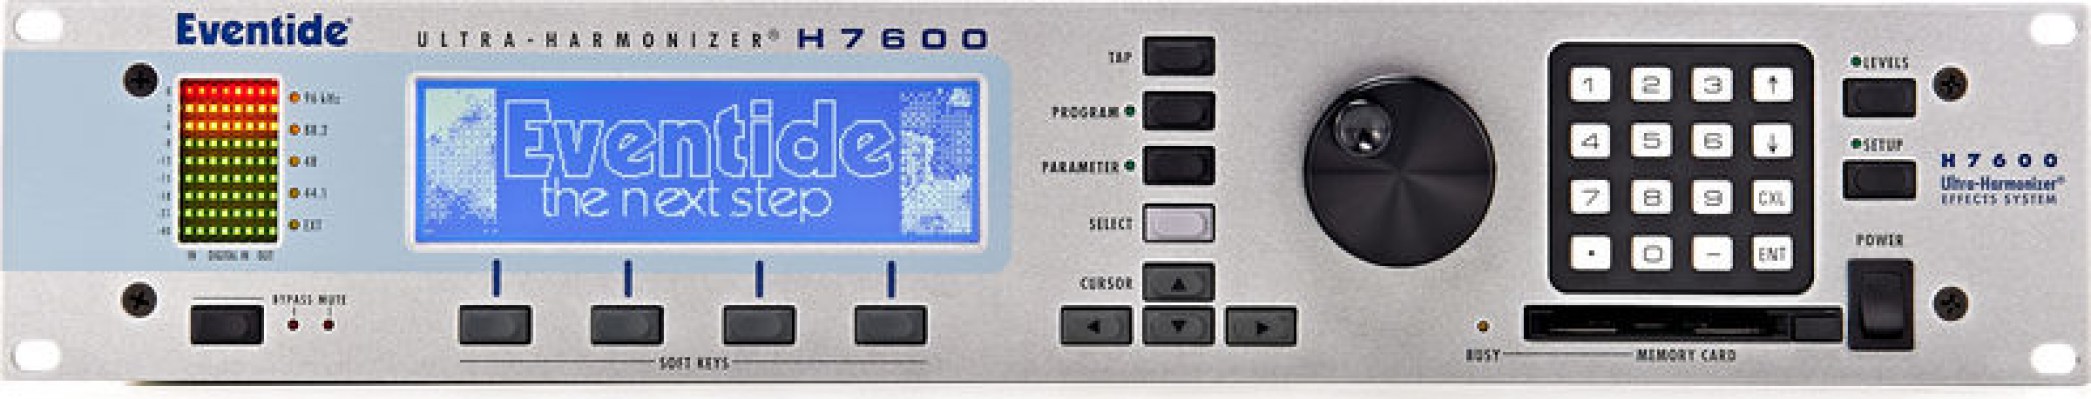 Eventide H-7600 Ultra Harmonizer